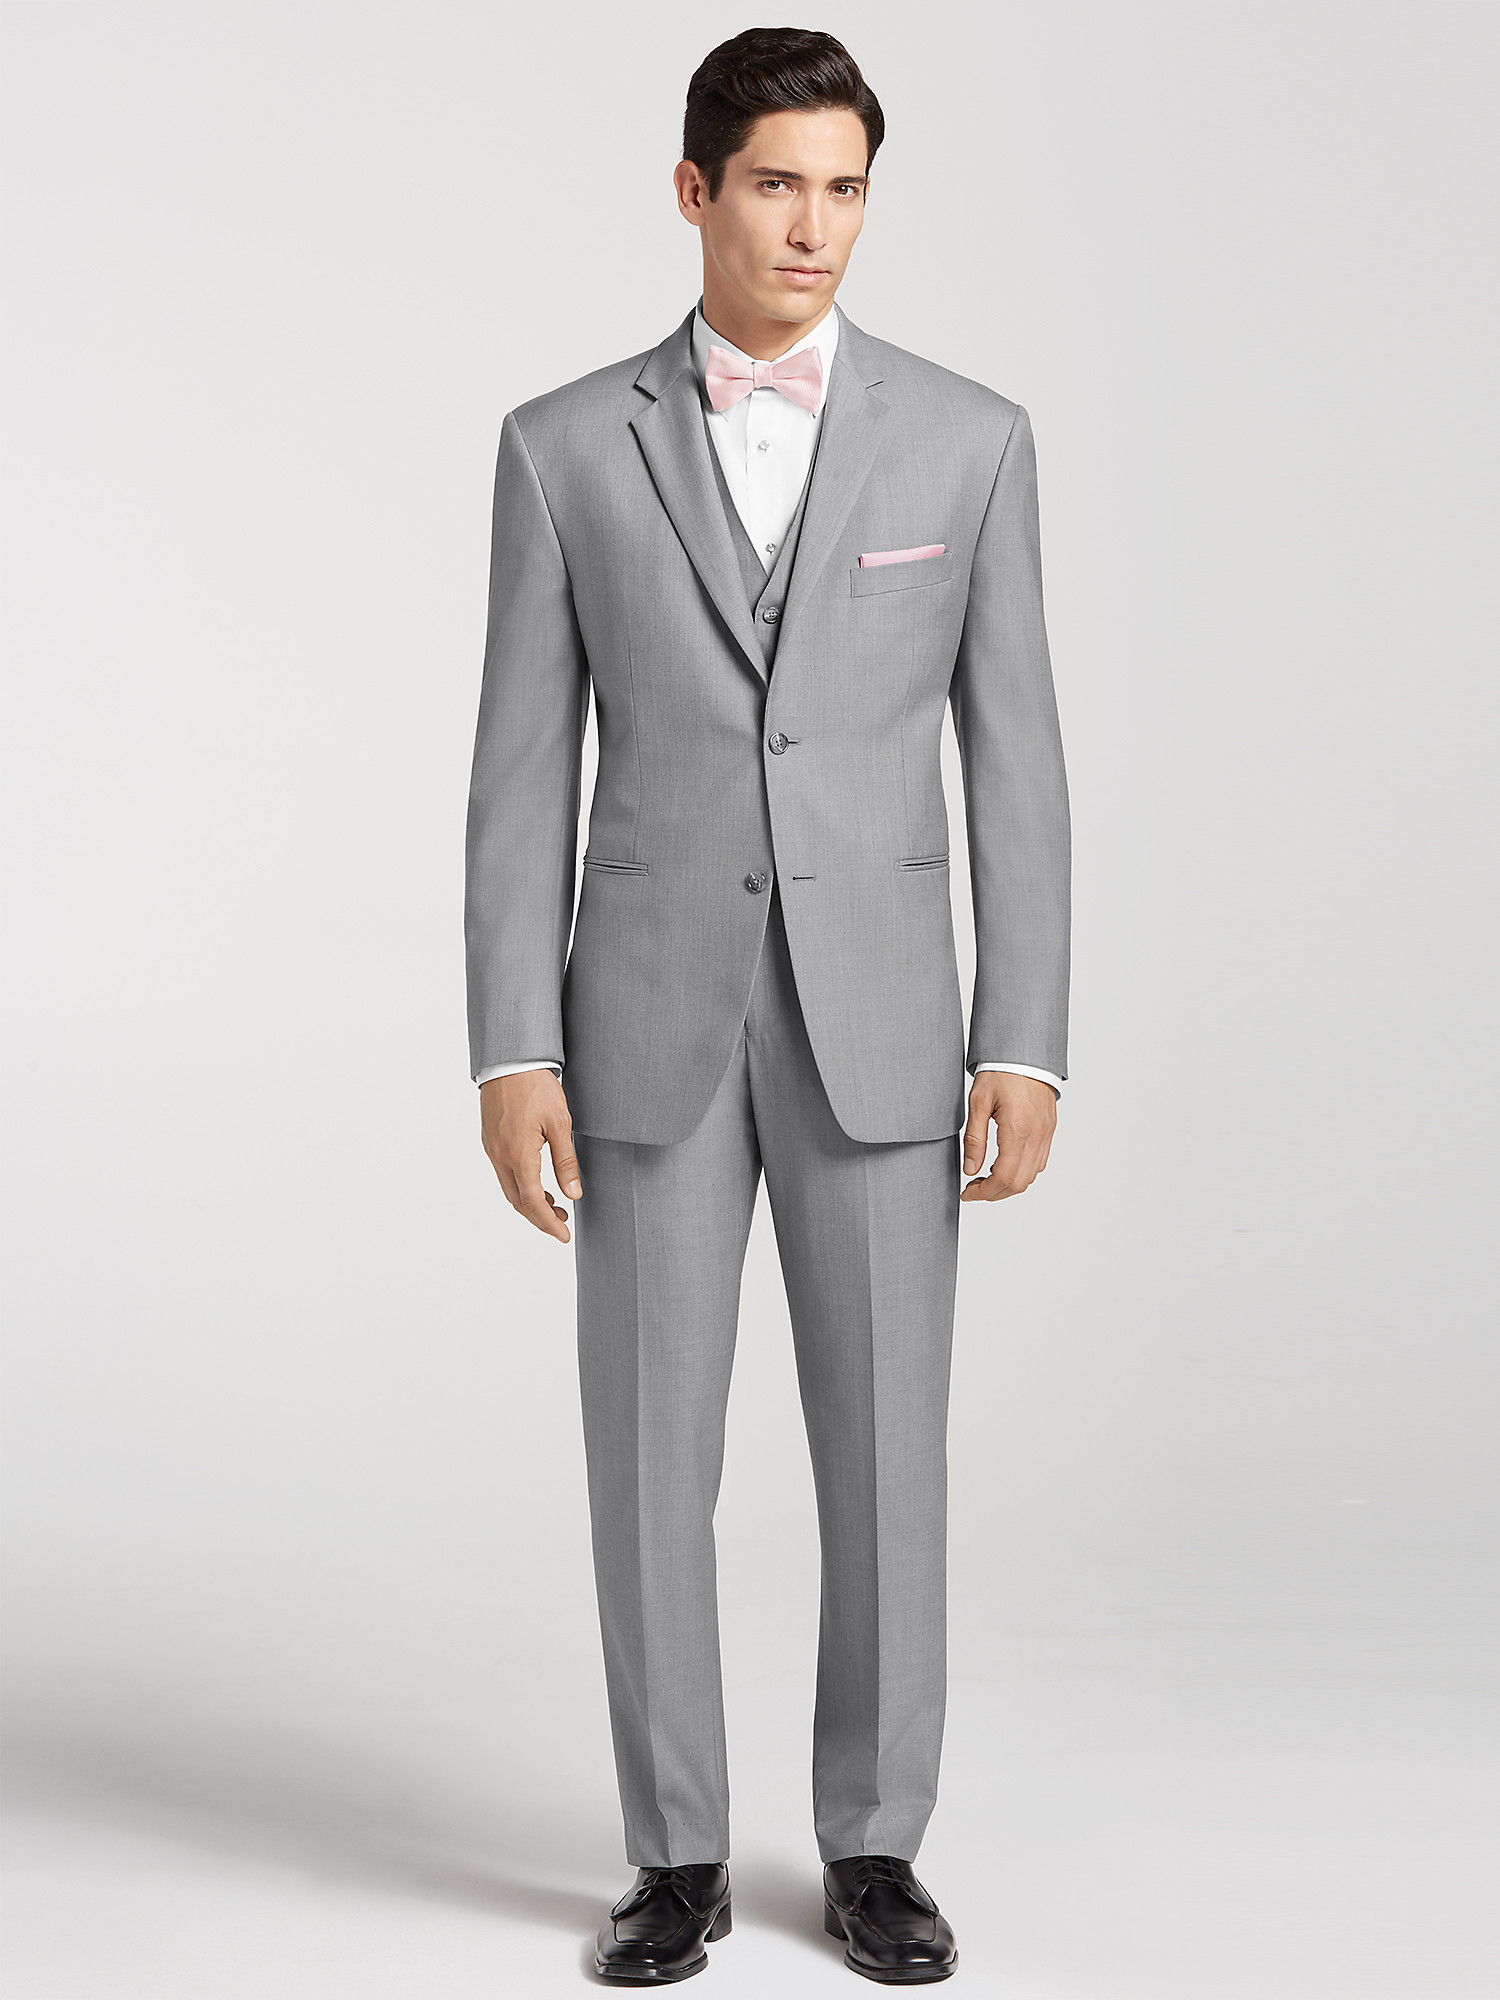 Vintage Men's Gray Suit by Pronto Uomo | Suit Rental | Men's Wearhouse